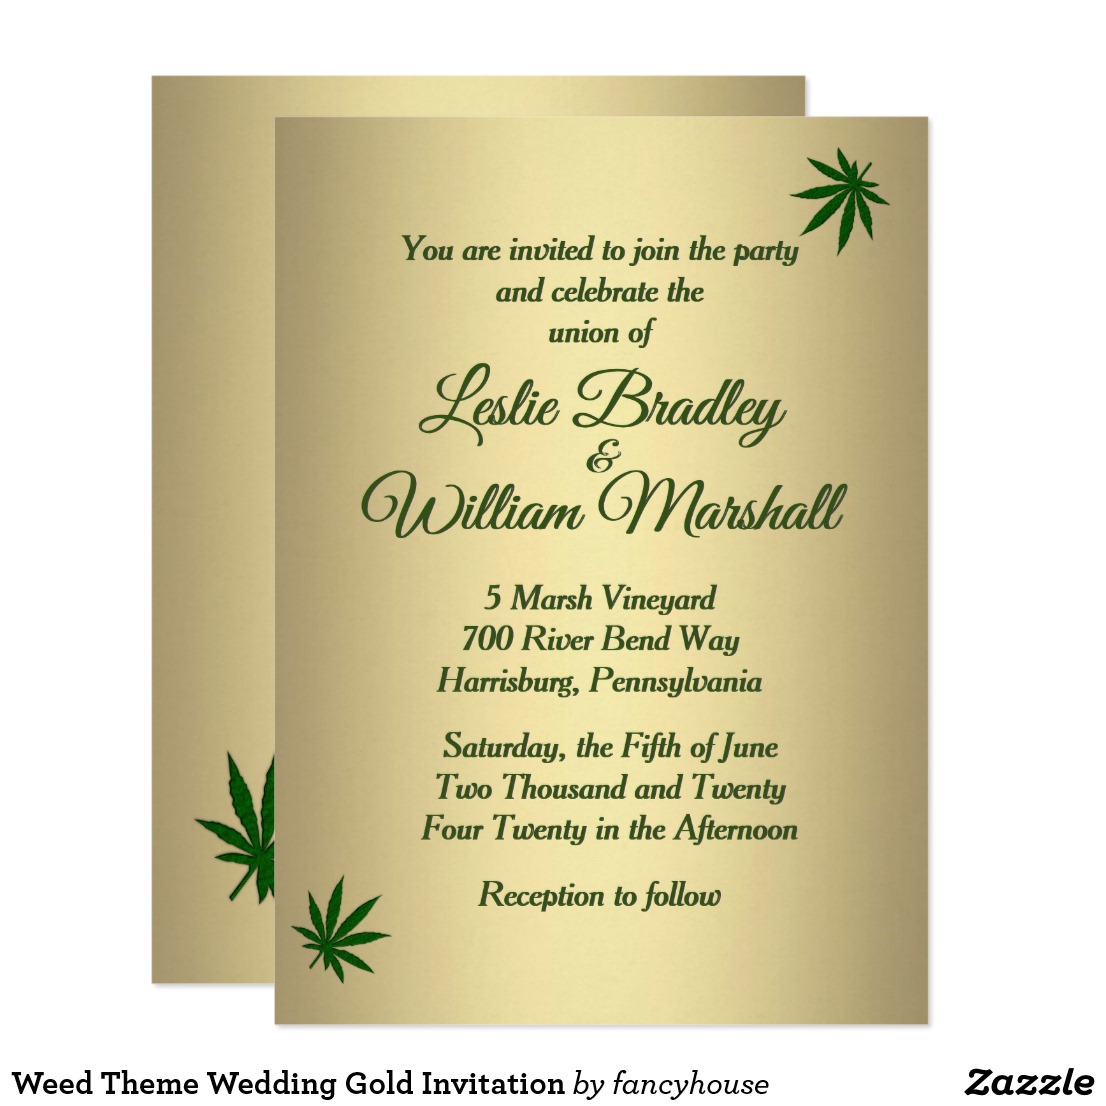 Weed Theme Wedding Gold Invitation